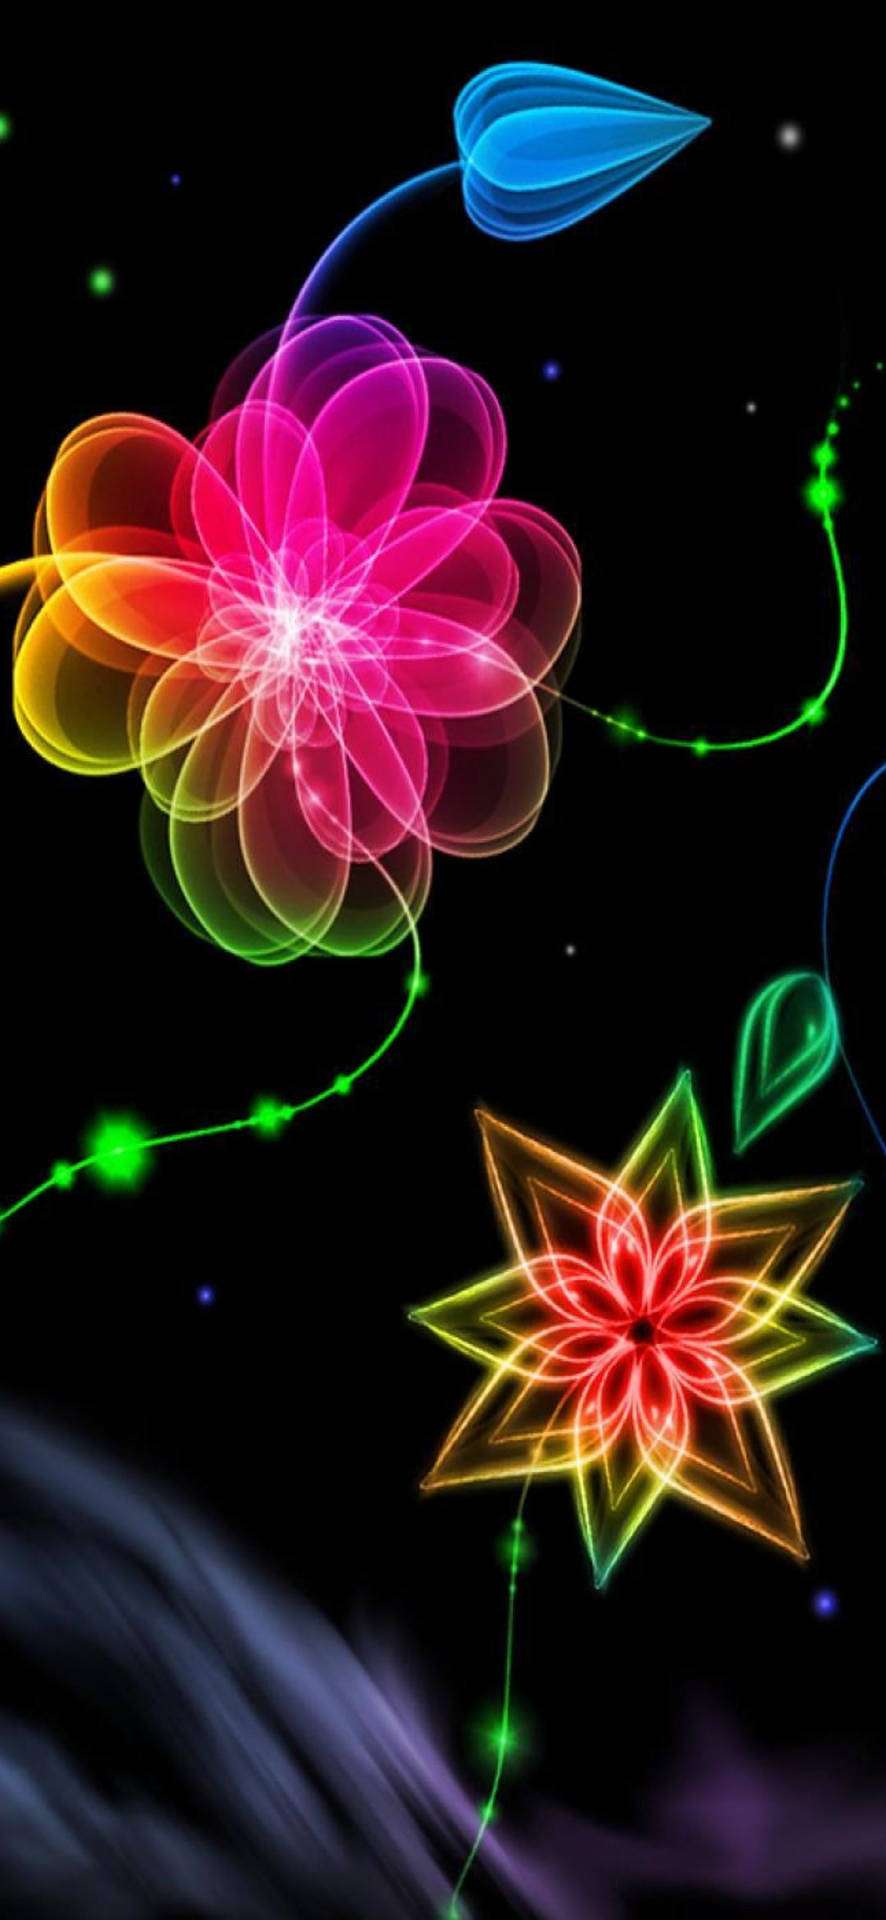 Neon flower petals Wallpaper 4k Ultra HD ID10123